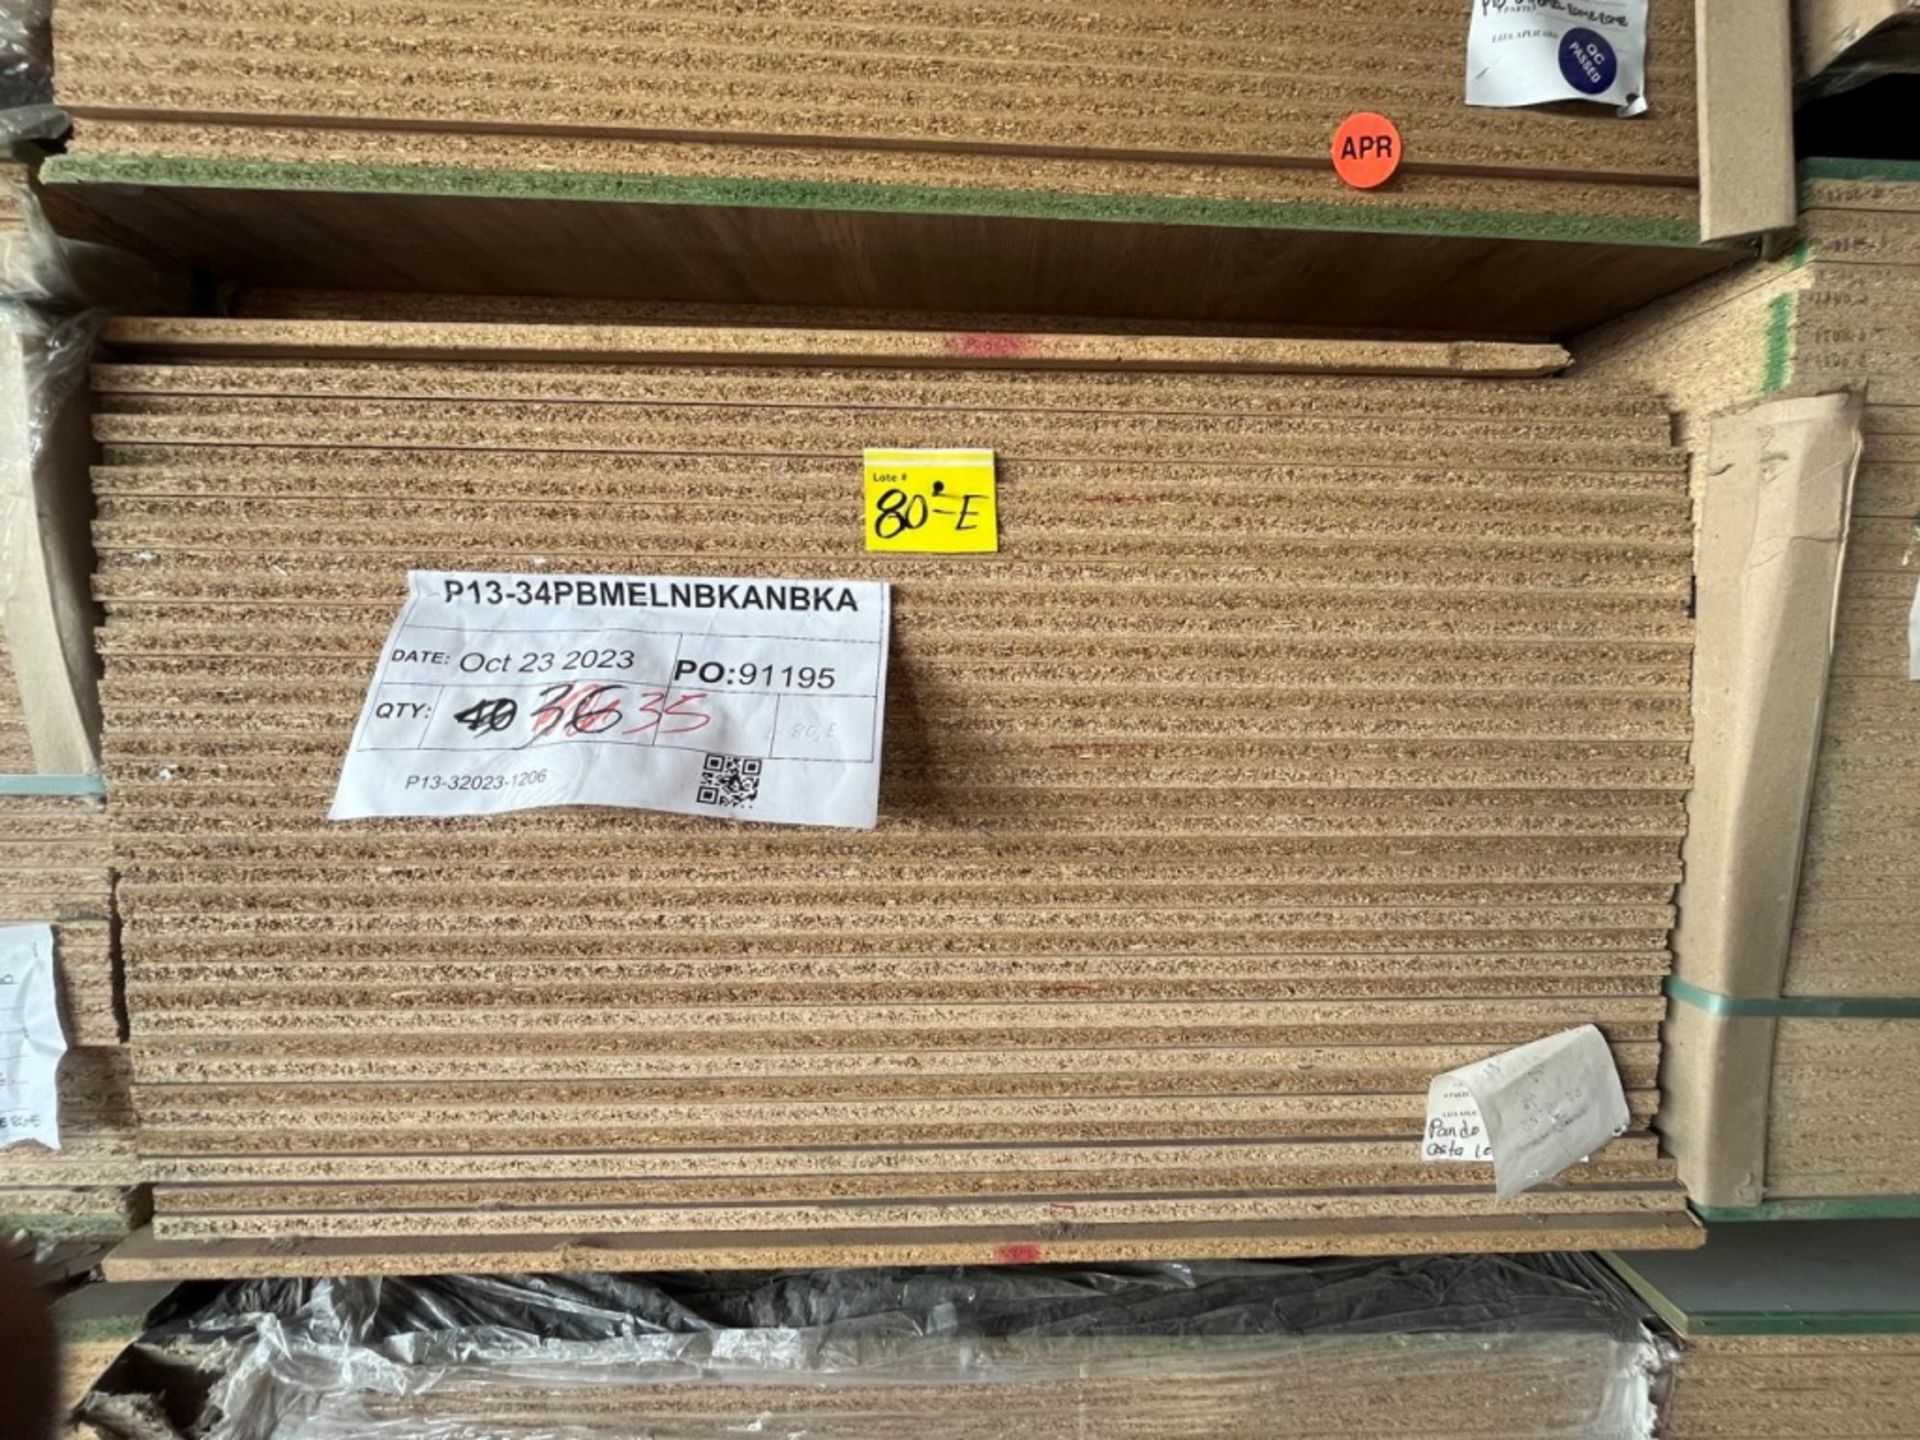 Lot of 35 pieces of compressed wood in material 3/4 PBMELNBKANBKA measuring 4 x 8 ft. / (NUEVO) Lot